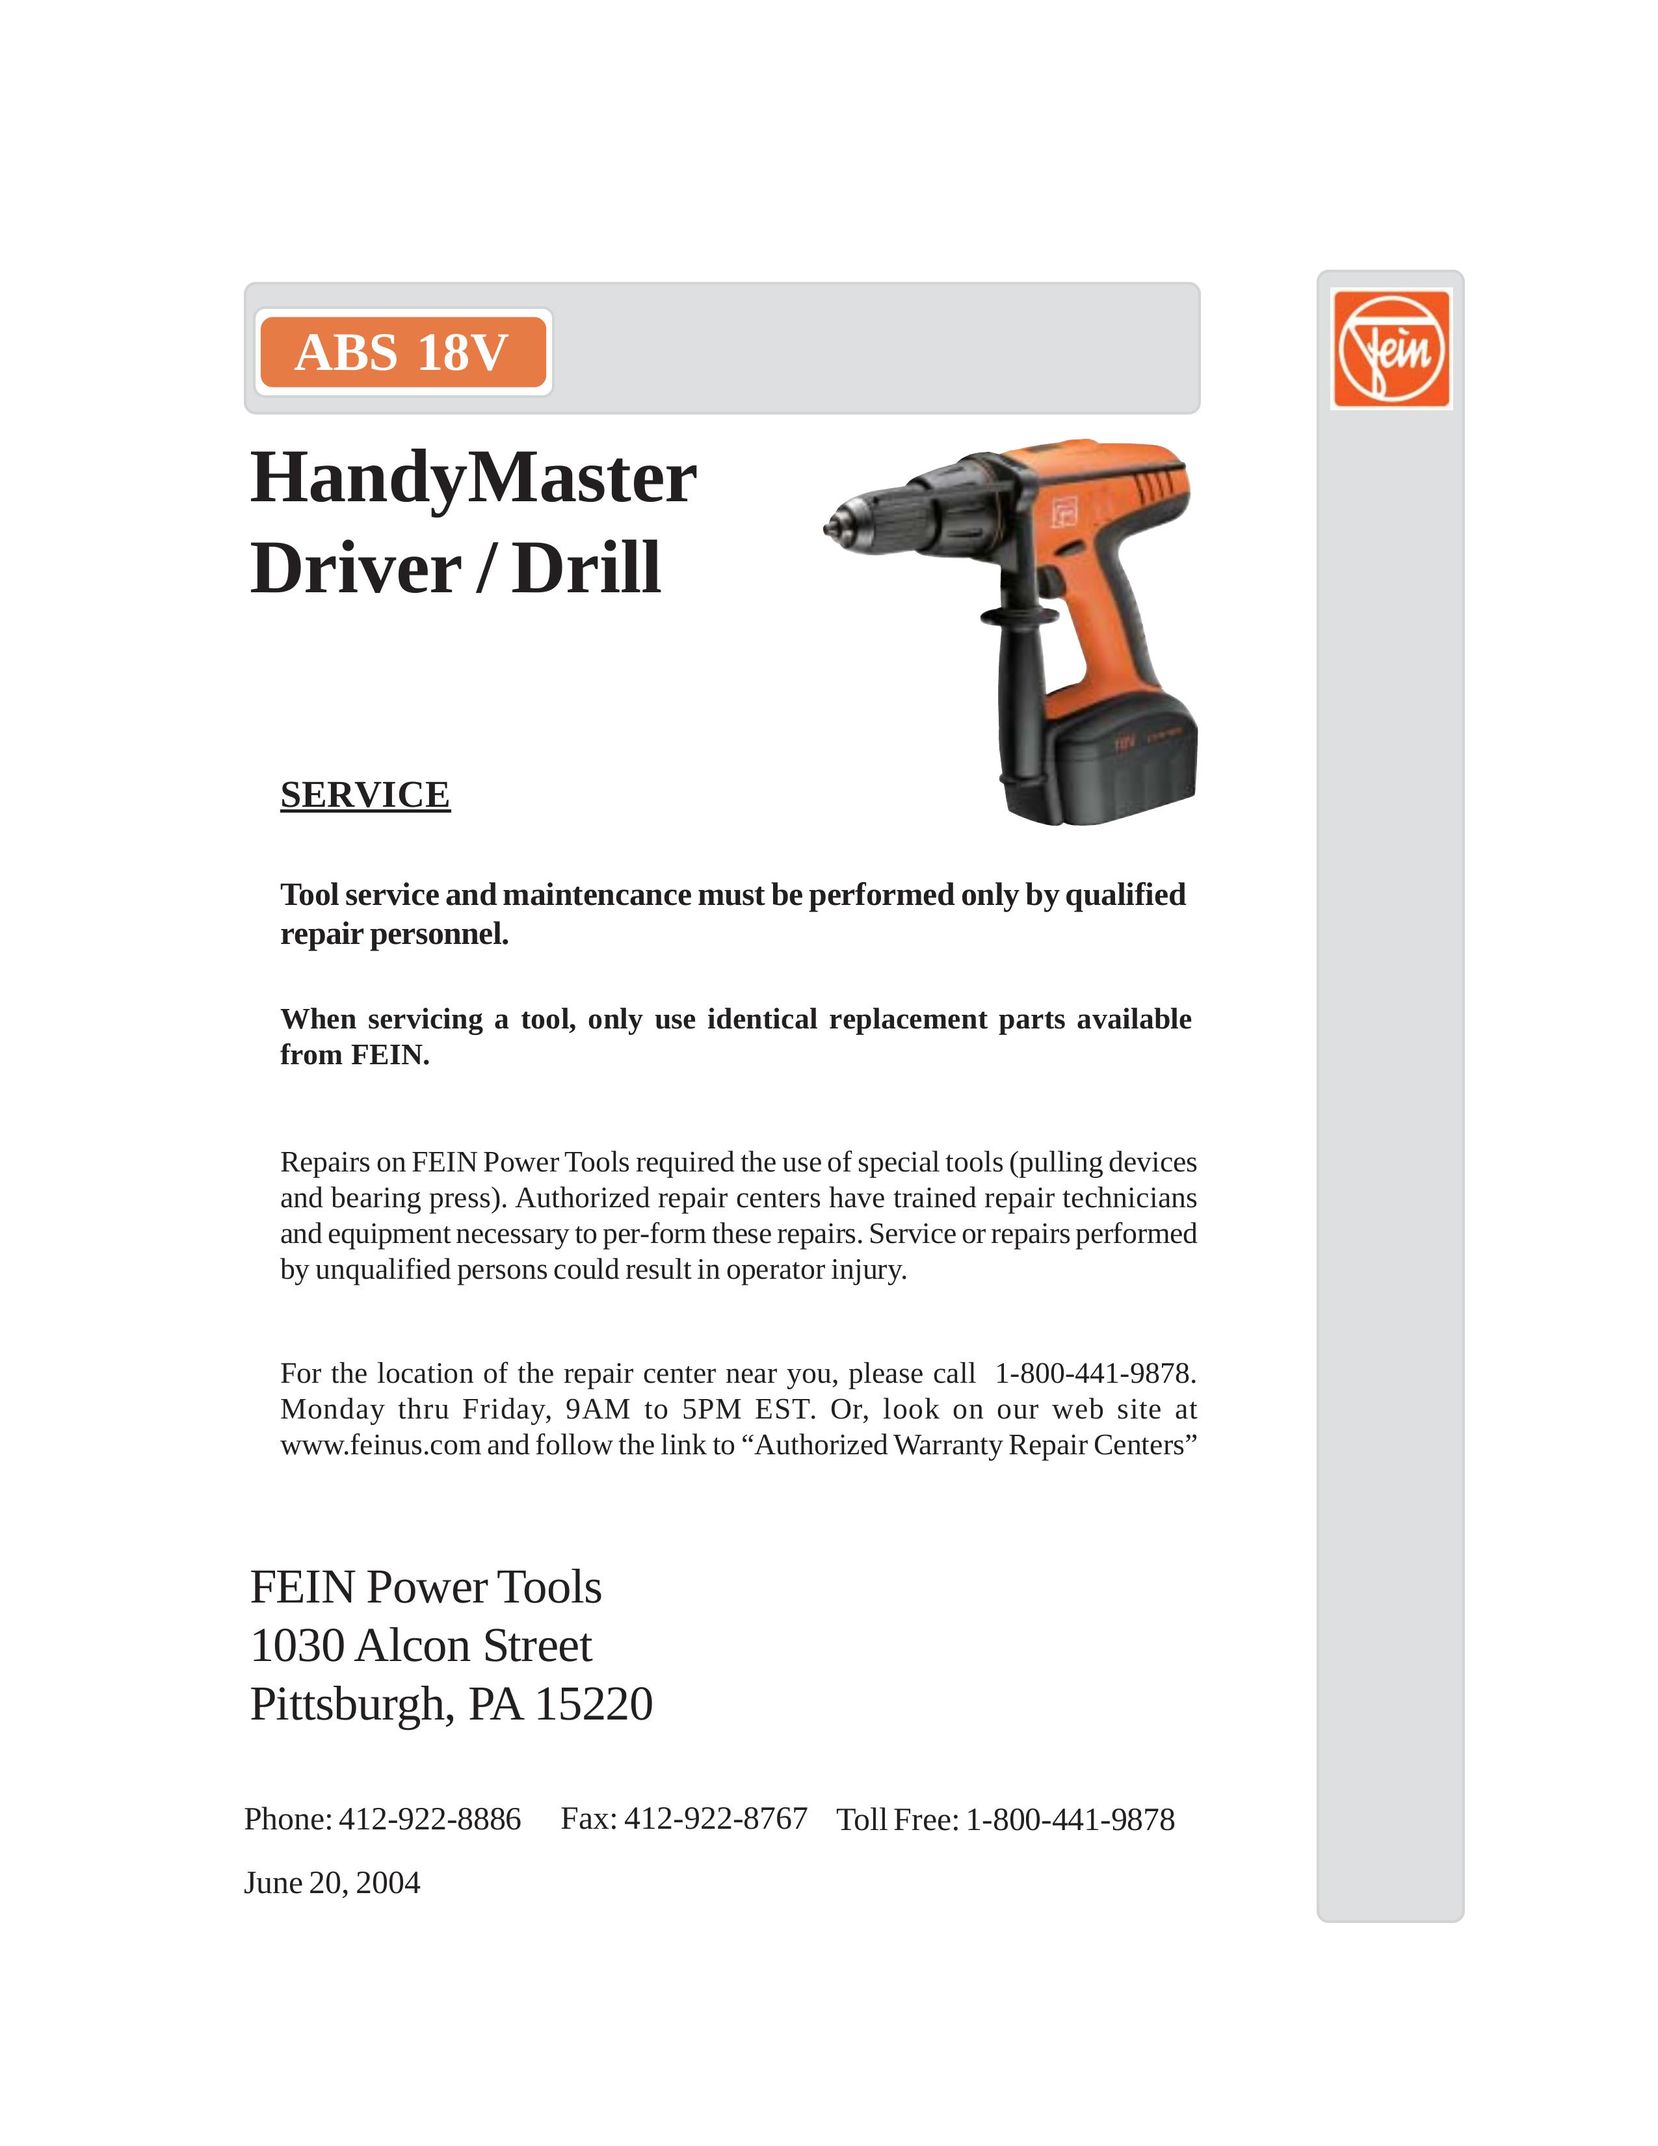 FEIN Power Tools ABS 18V Drill User Manual